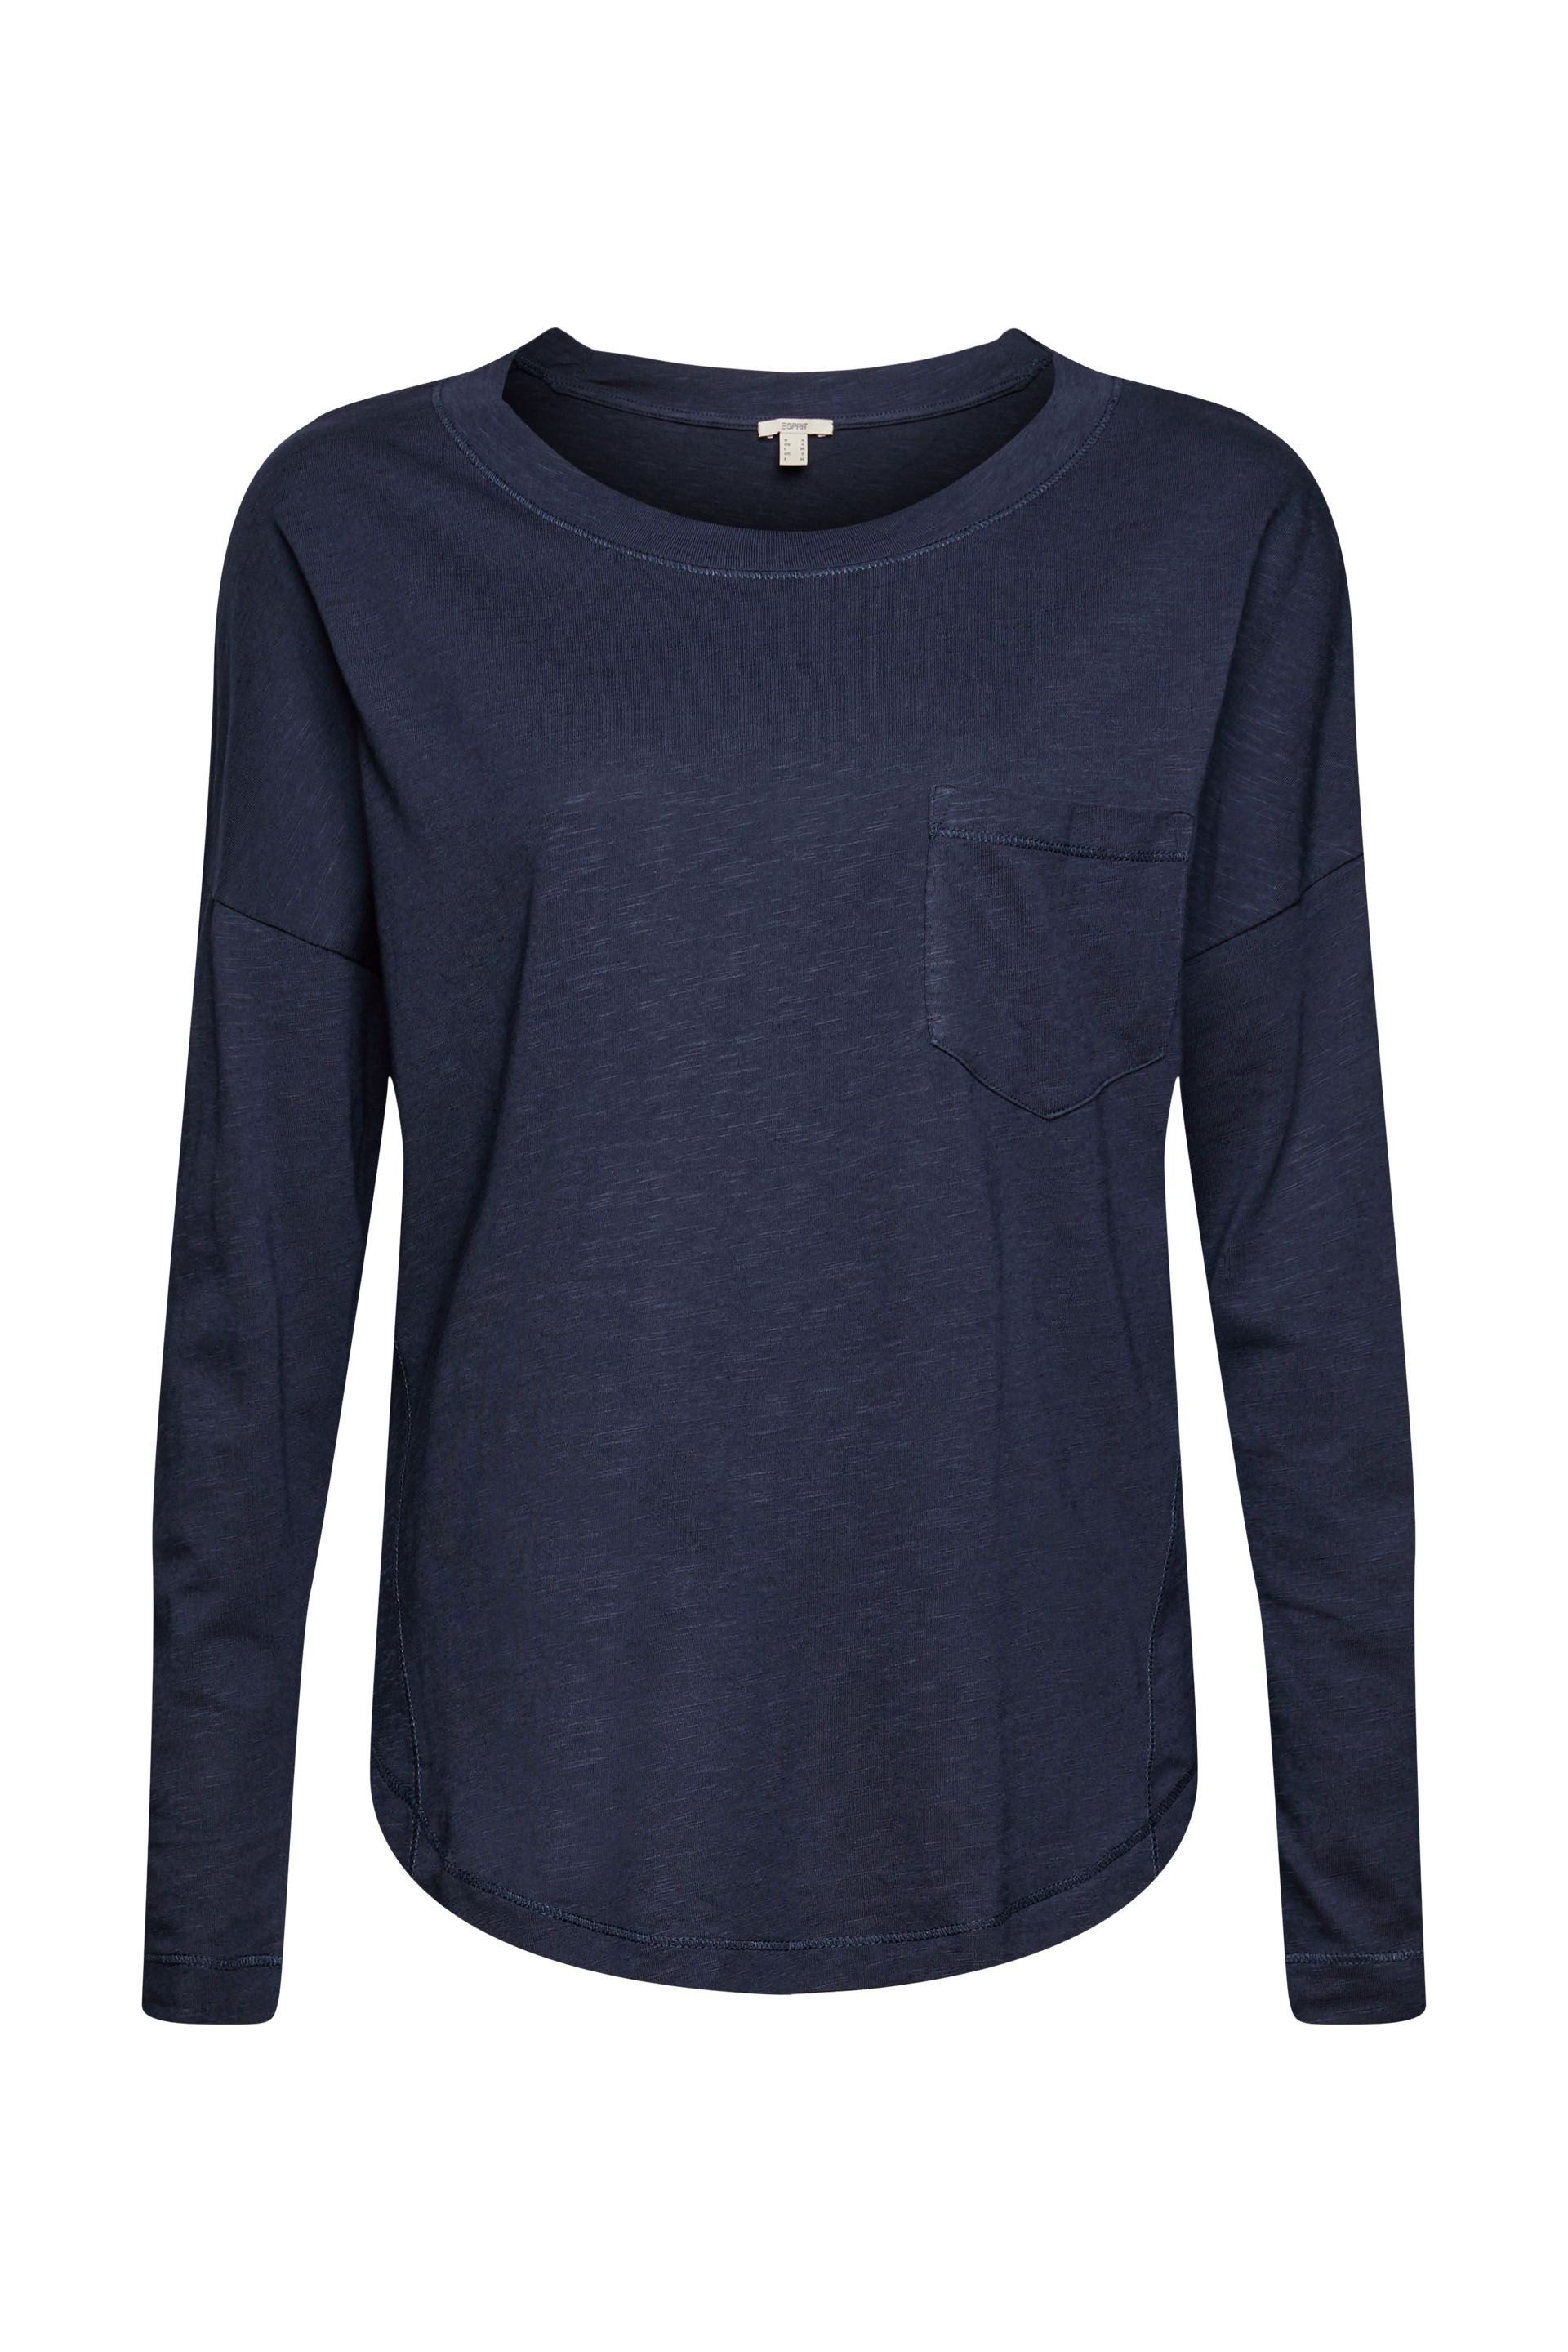 Long-sleeved T-shirt with pocket, Blue, large image number 0